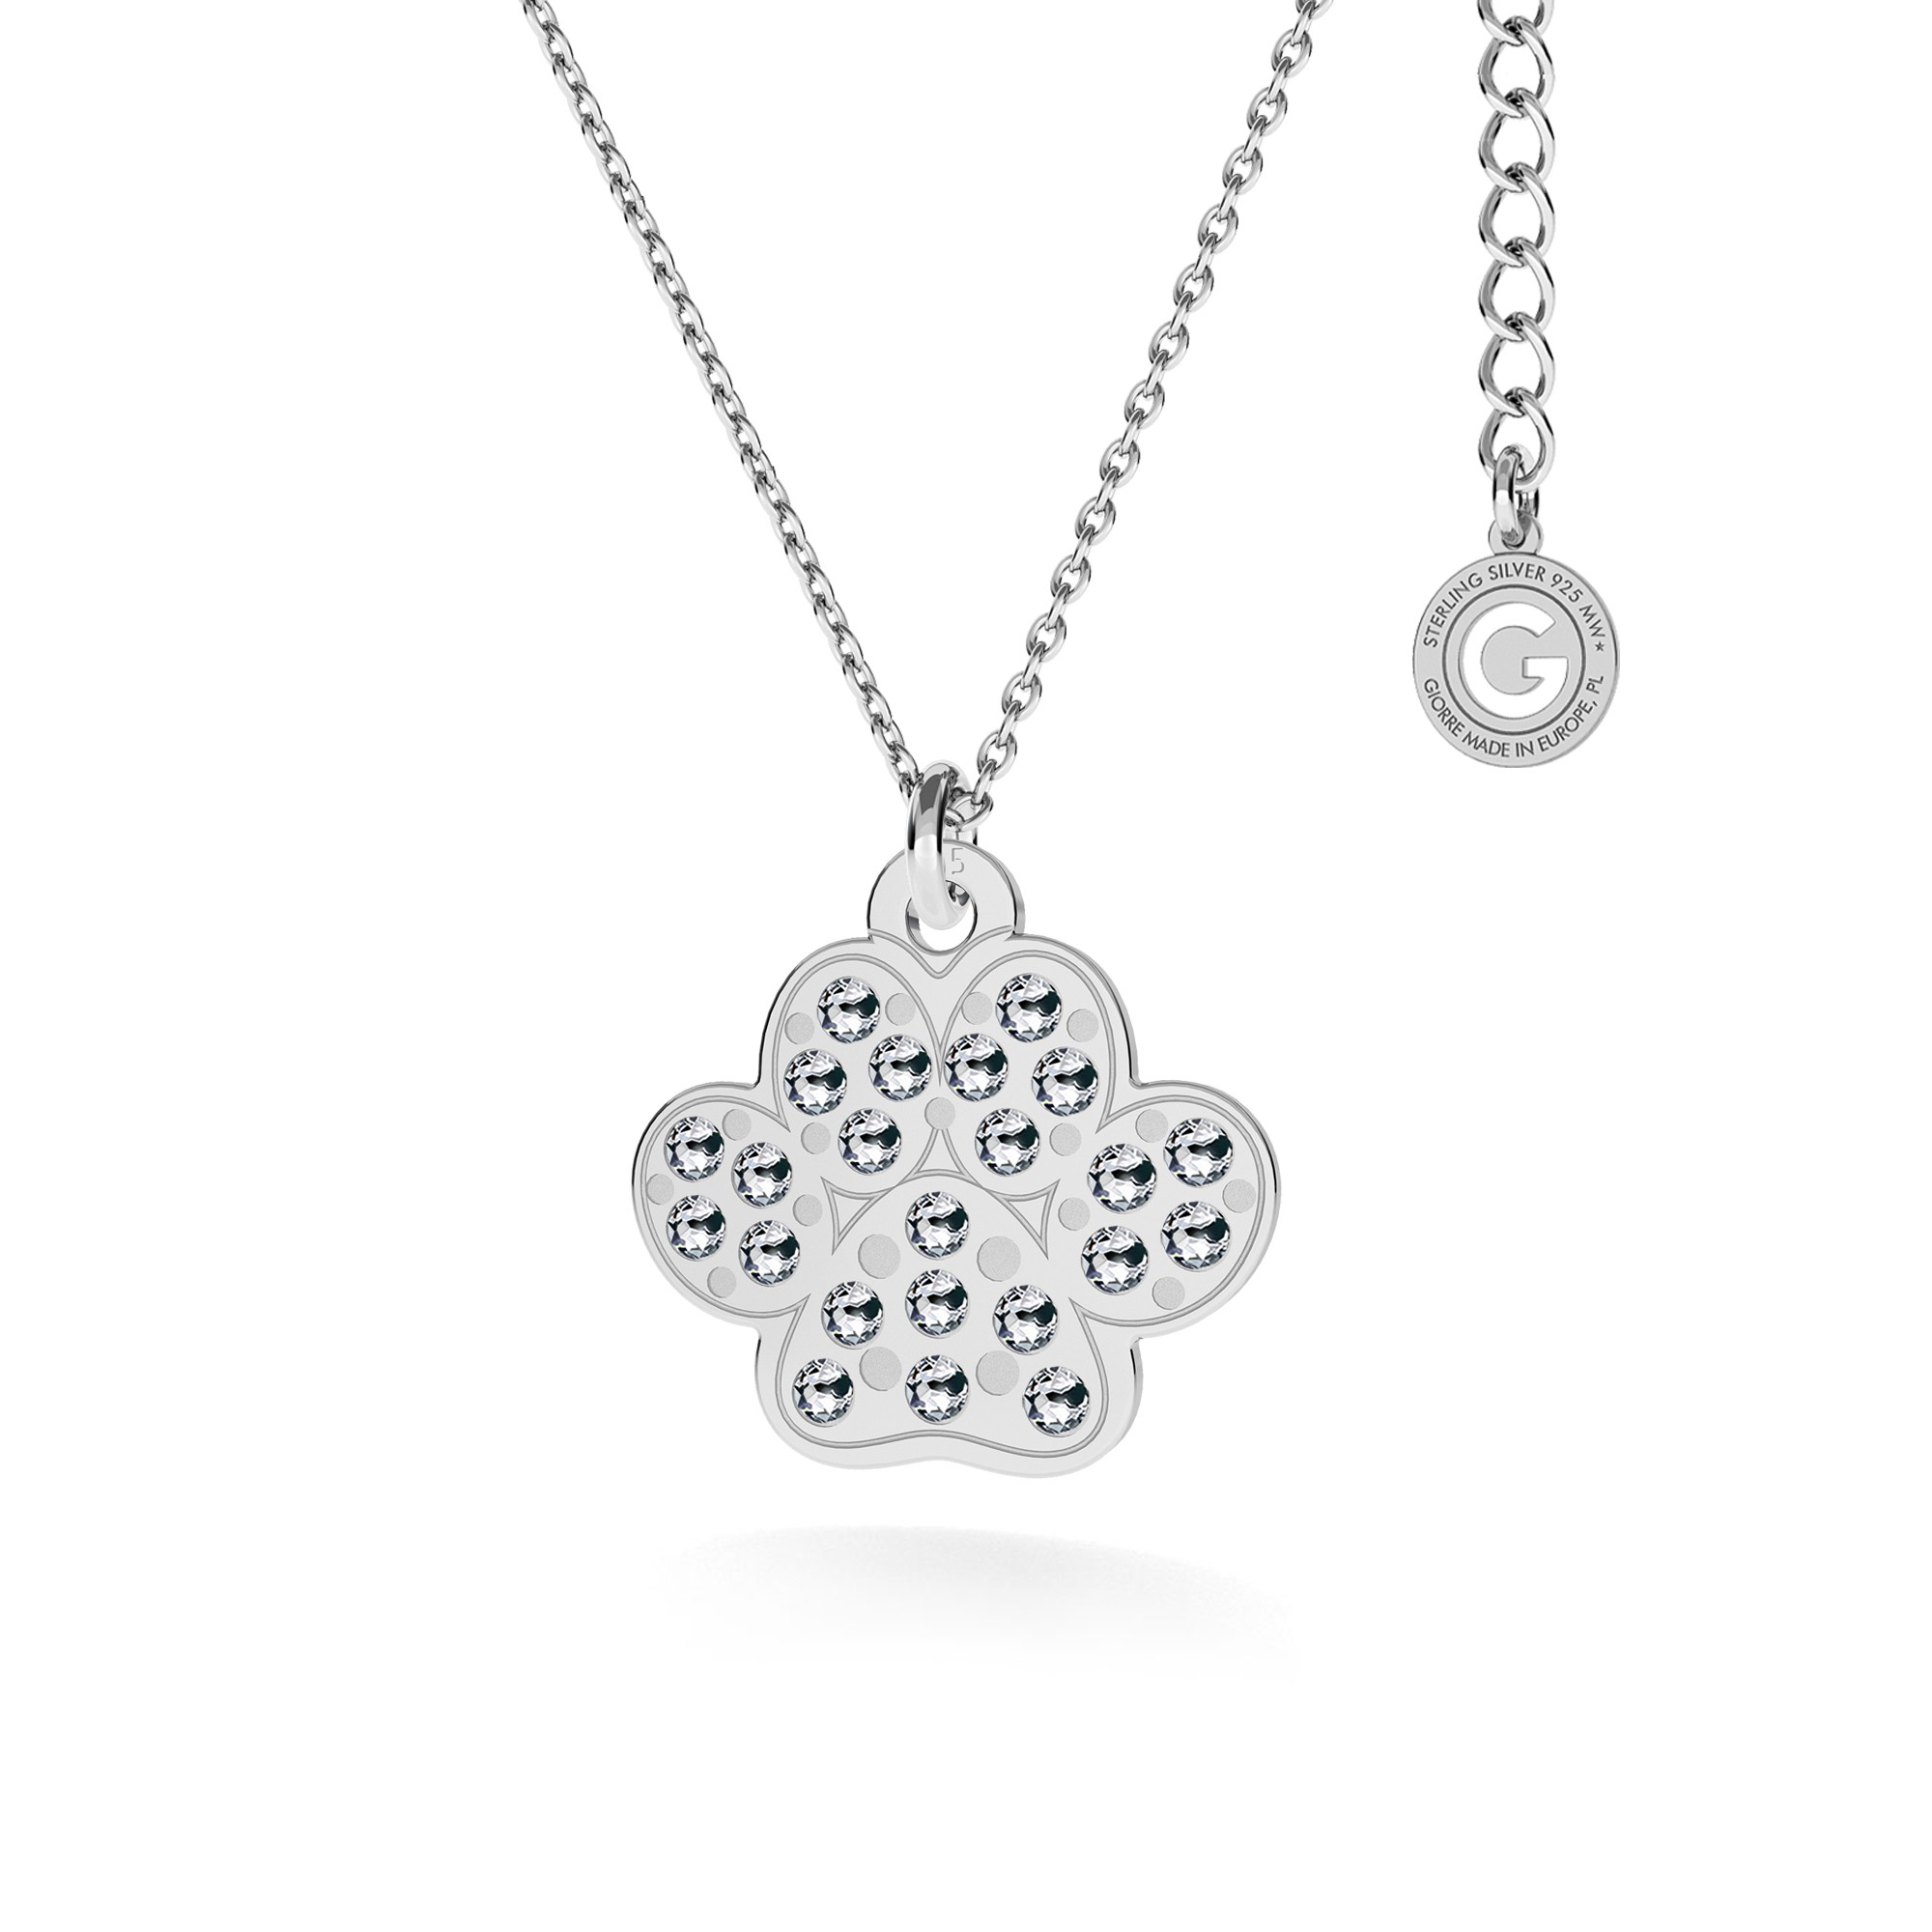 DOG PAW necklace with Swarovski crystals silver 925